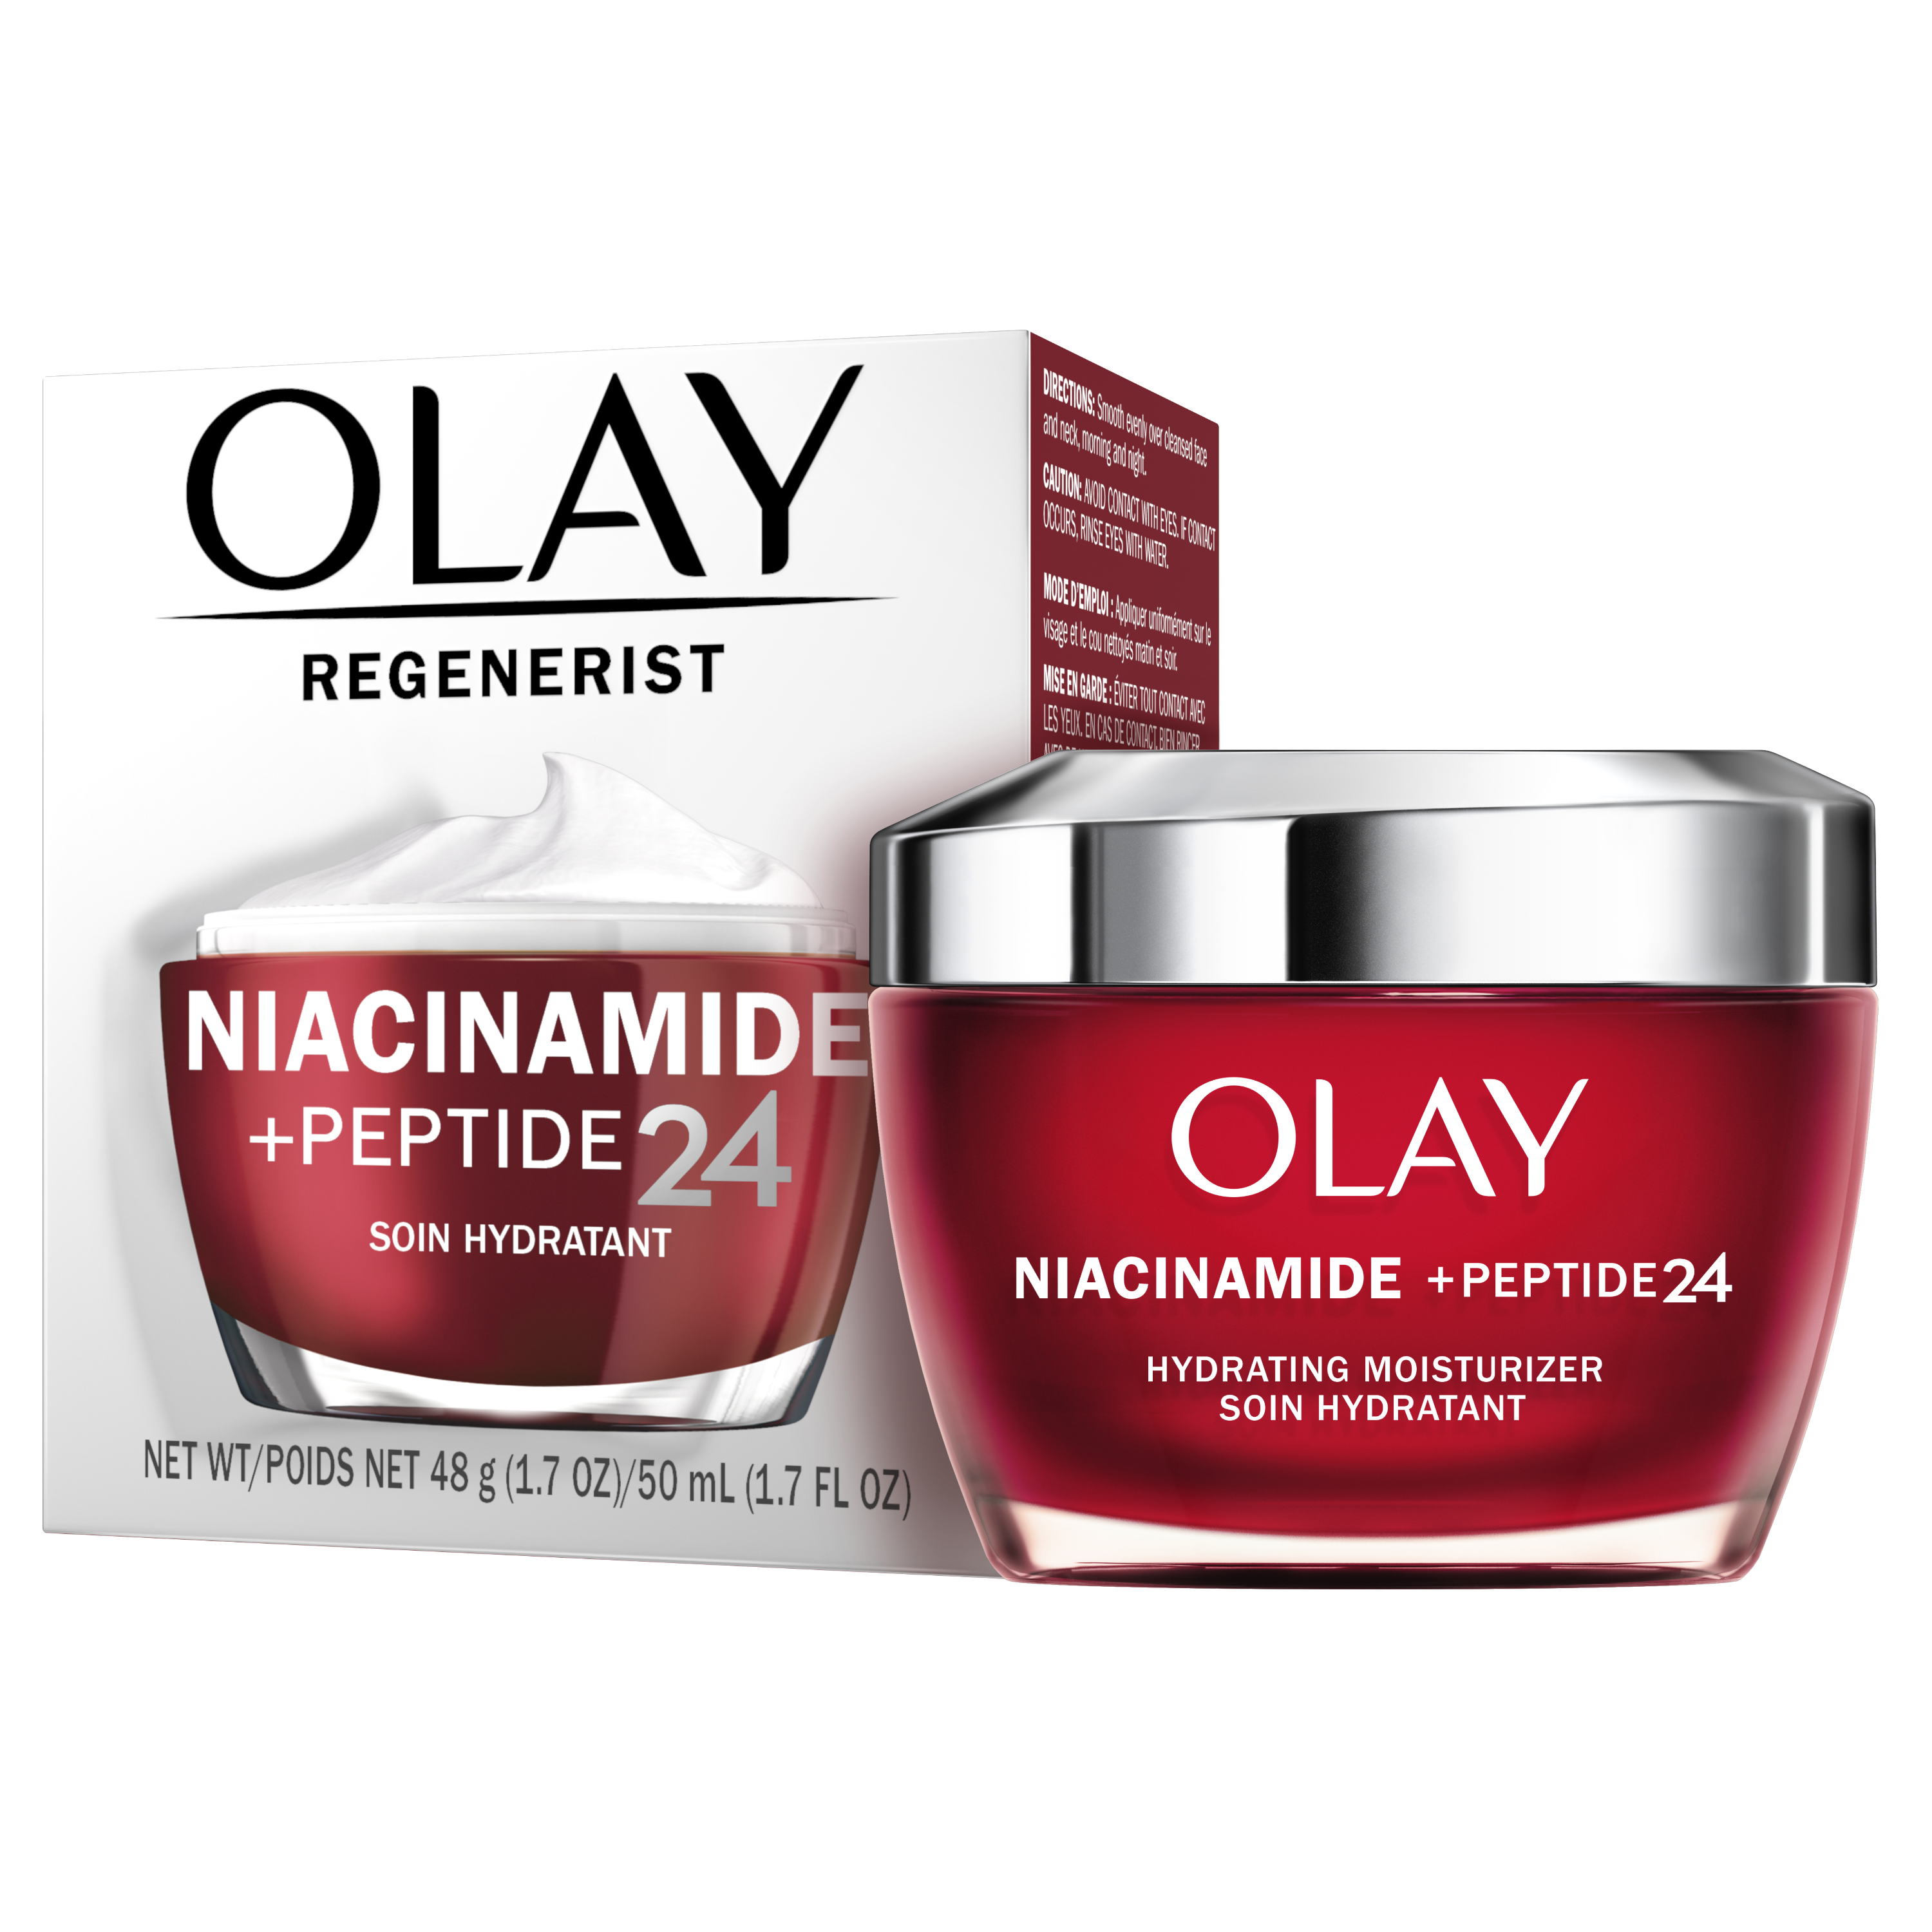 Hydratant pour le visage Olay Regenerist niacinamide + peptide 24, 1,7 oz